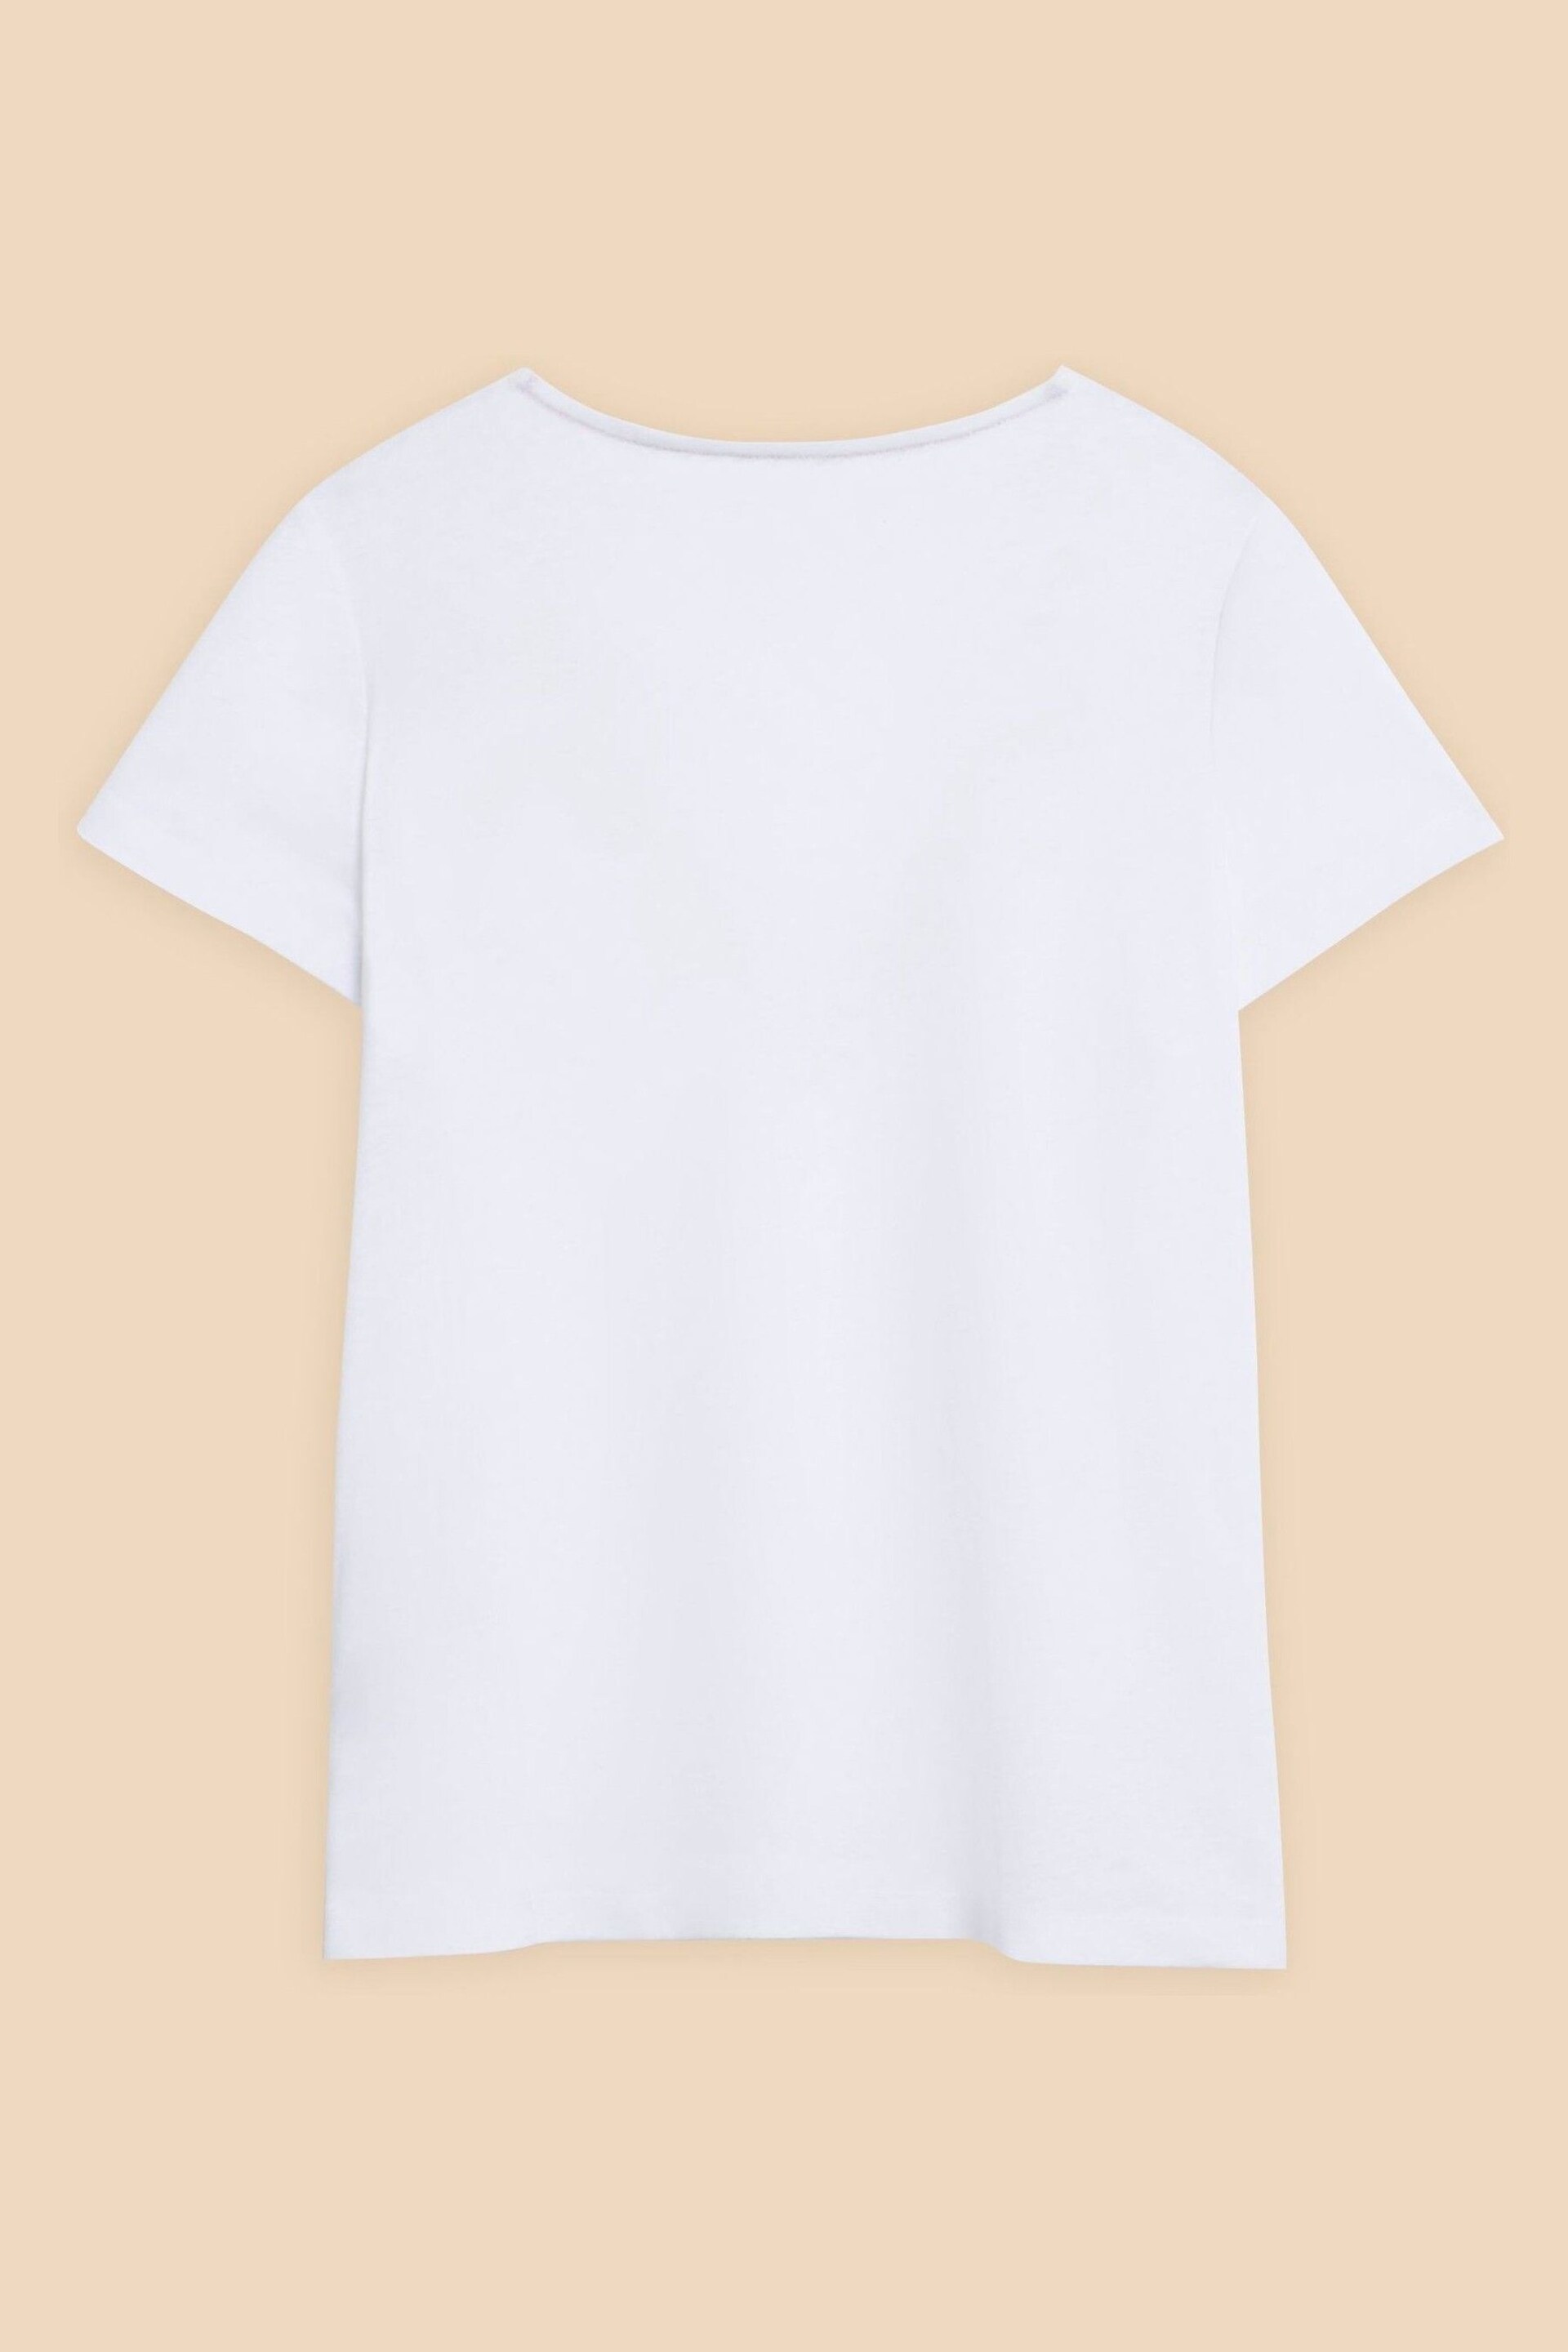 White Stuff White Lace Ellie T-Shirt - Image 6 of 7